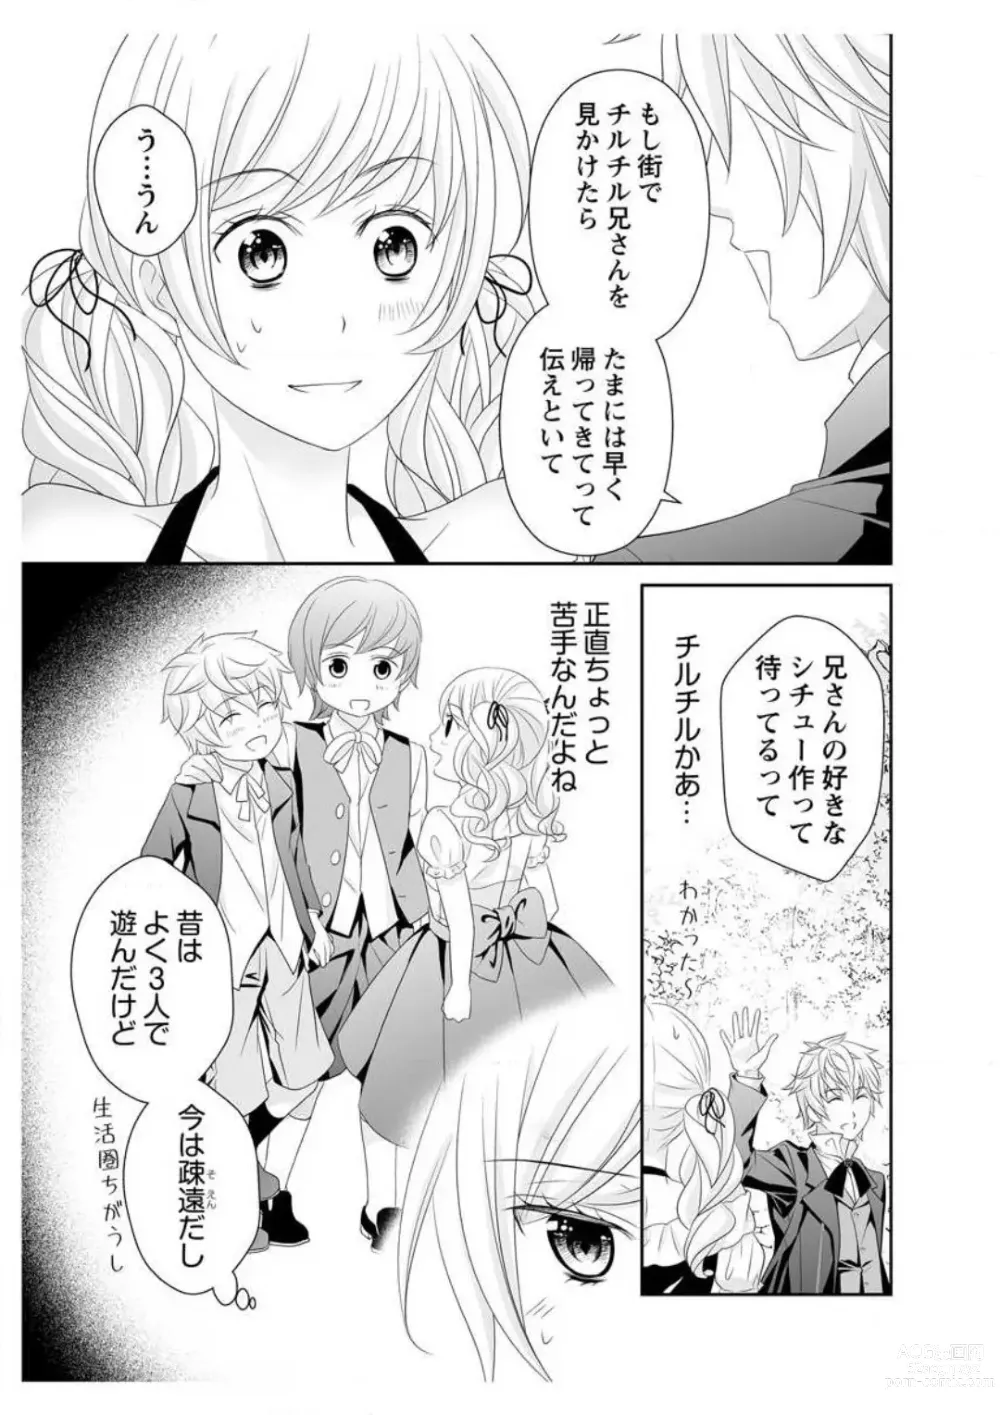 Page 7 of manga Ero ◆ Meruhen Aoi Tori 1-10